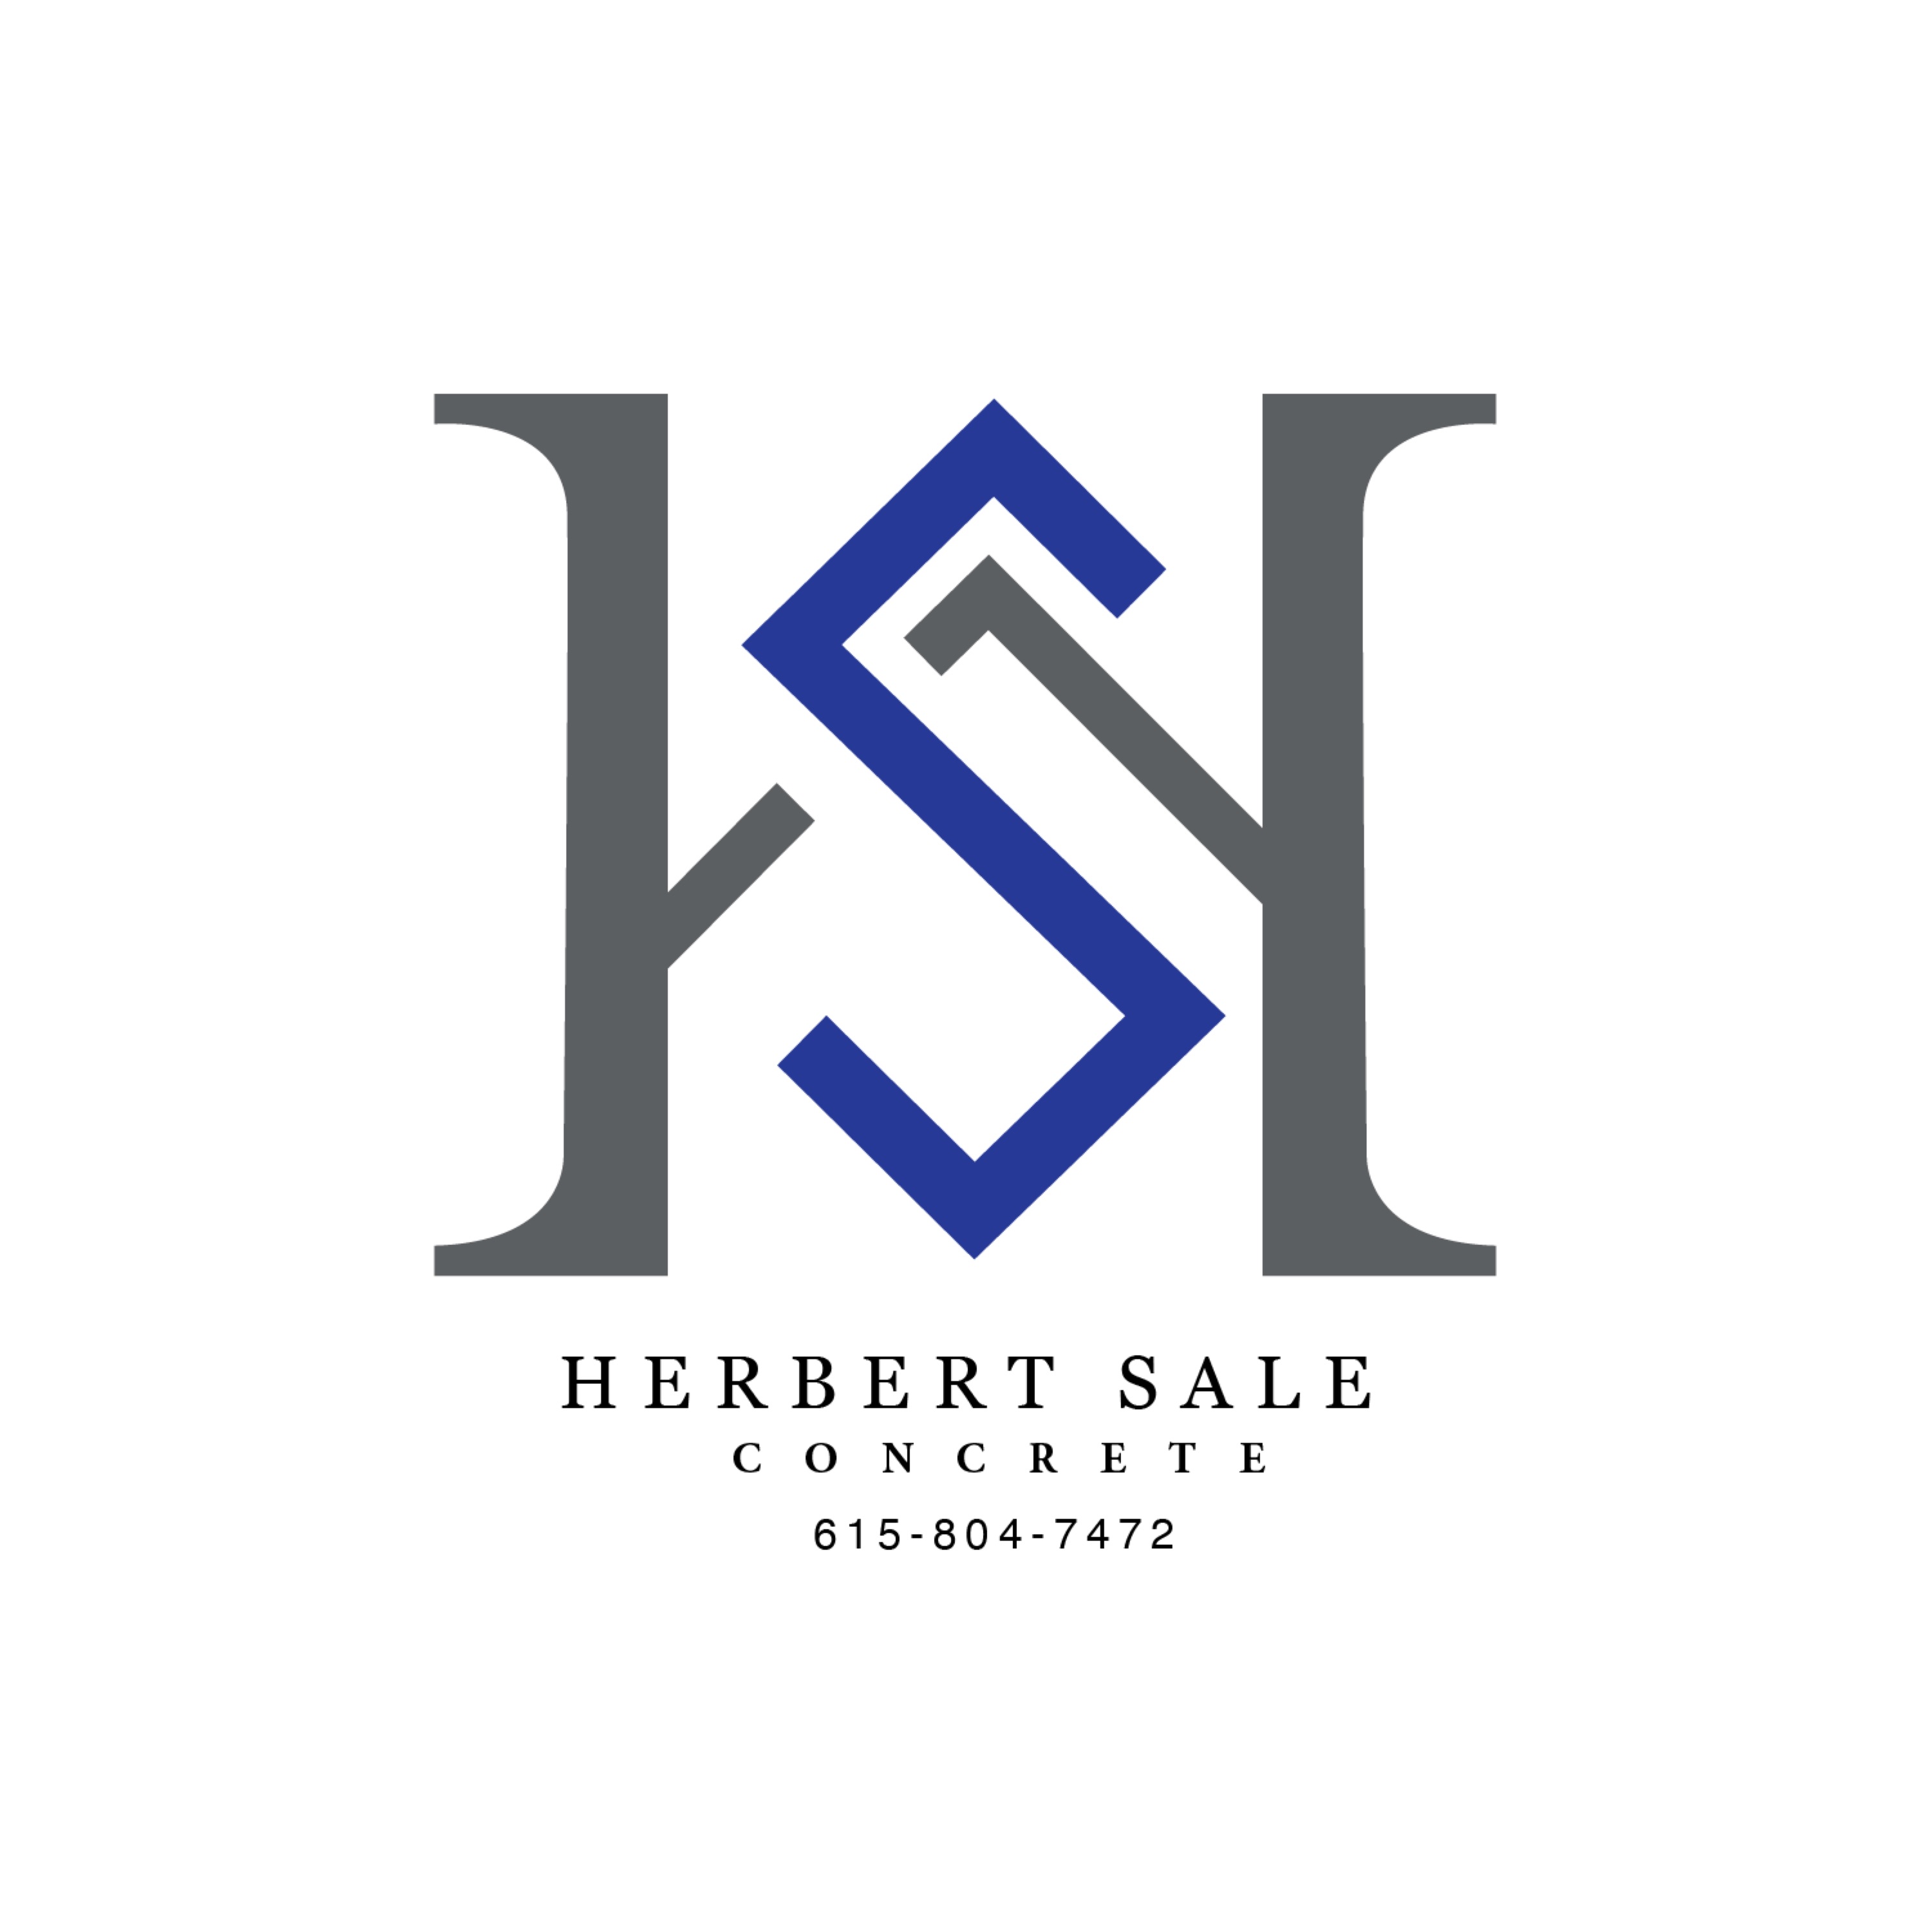 Herbert Sale Concrete Logo